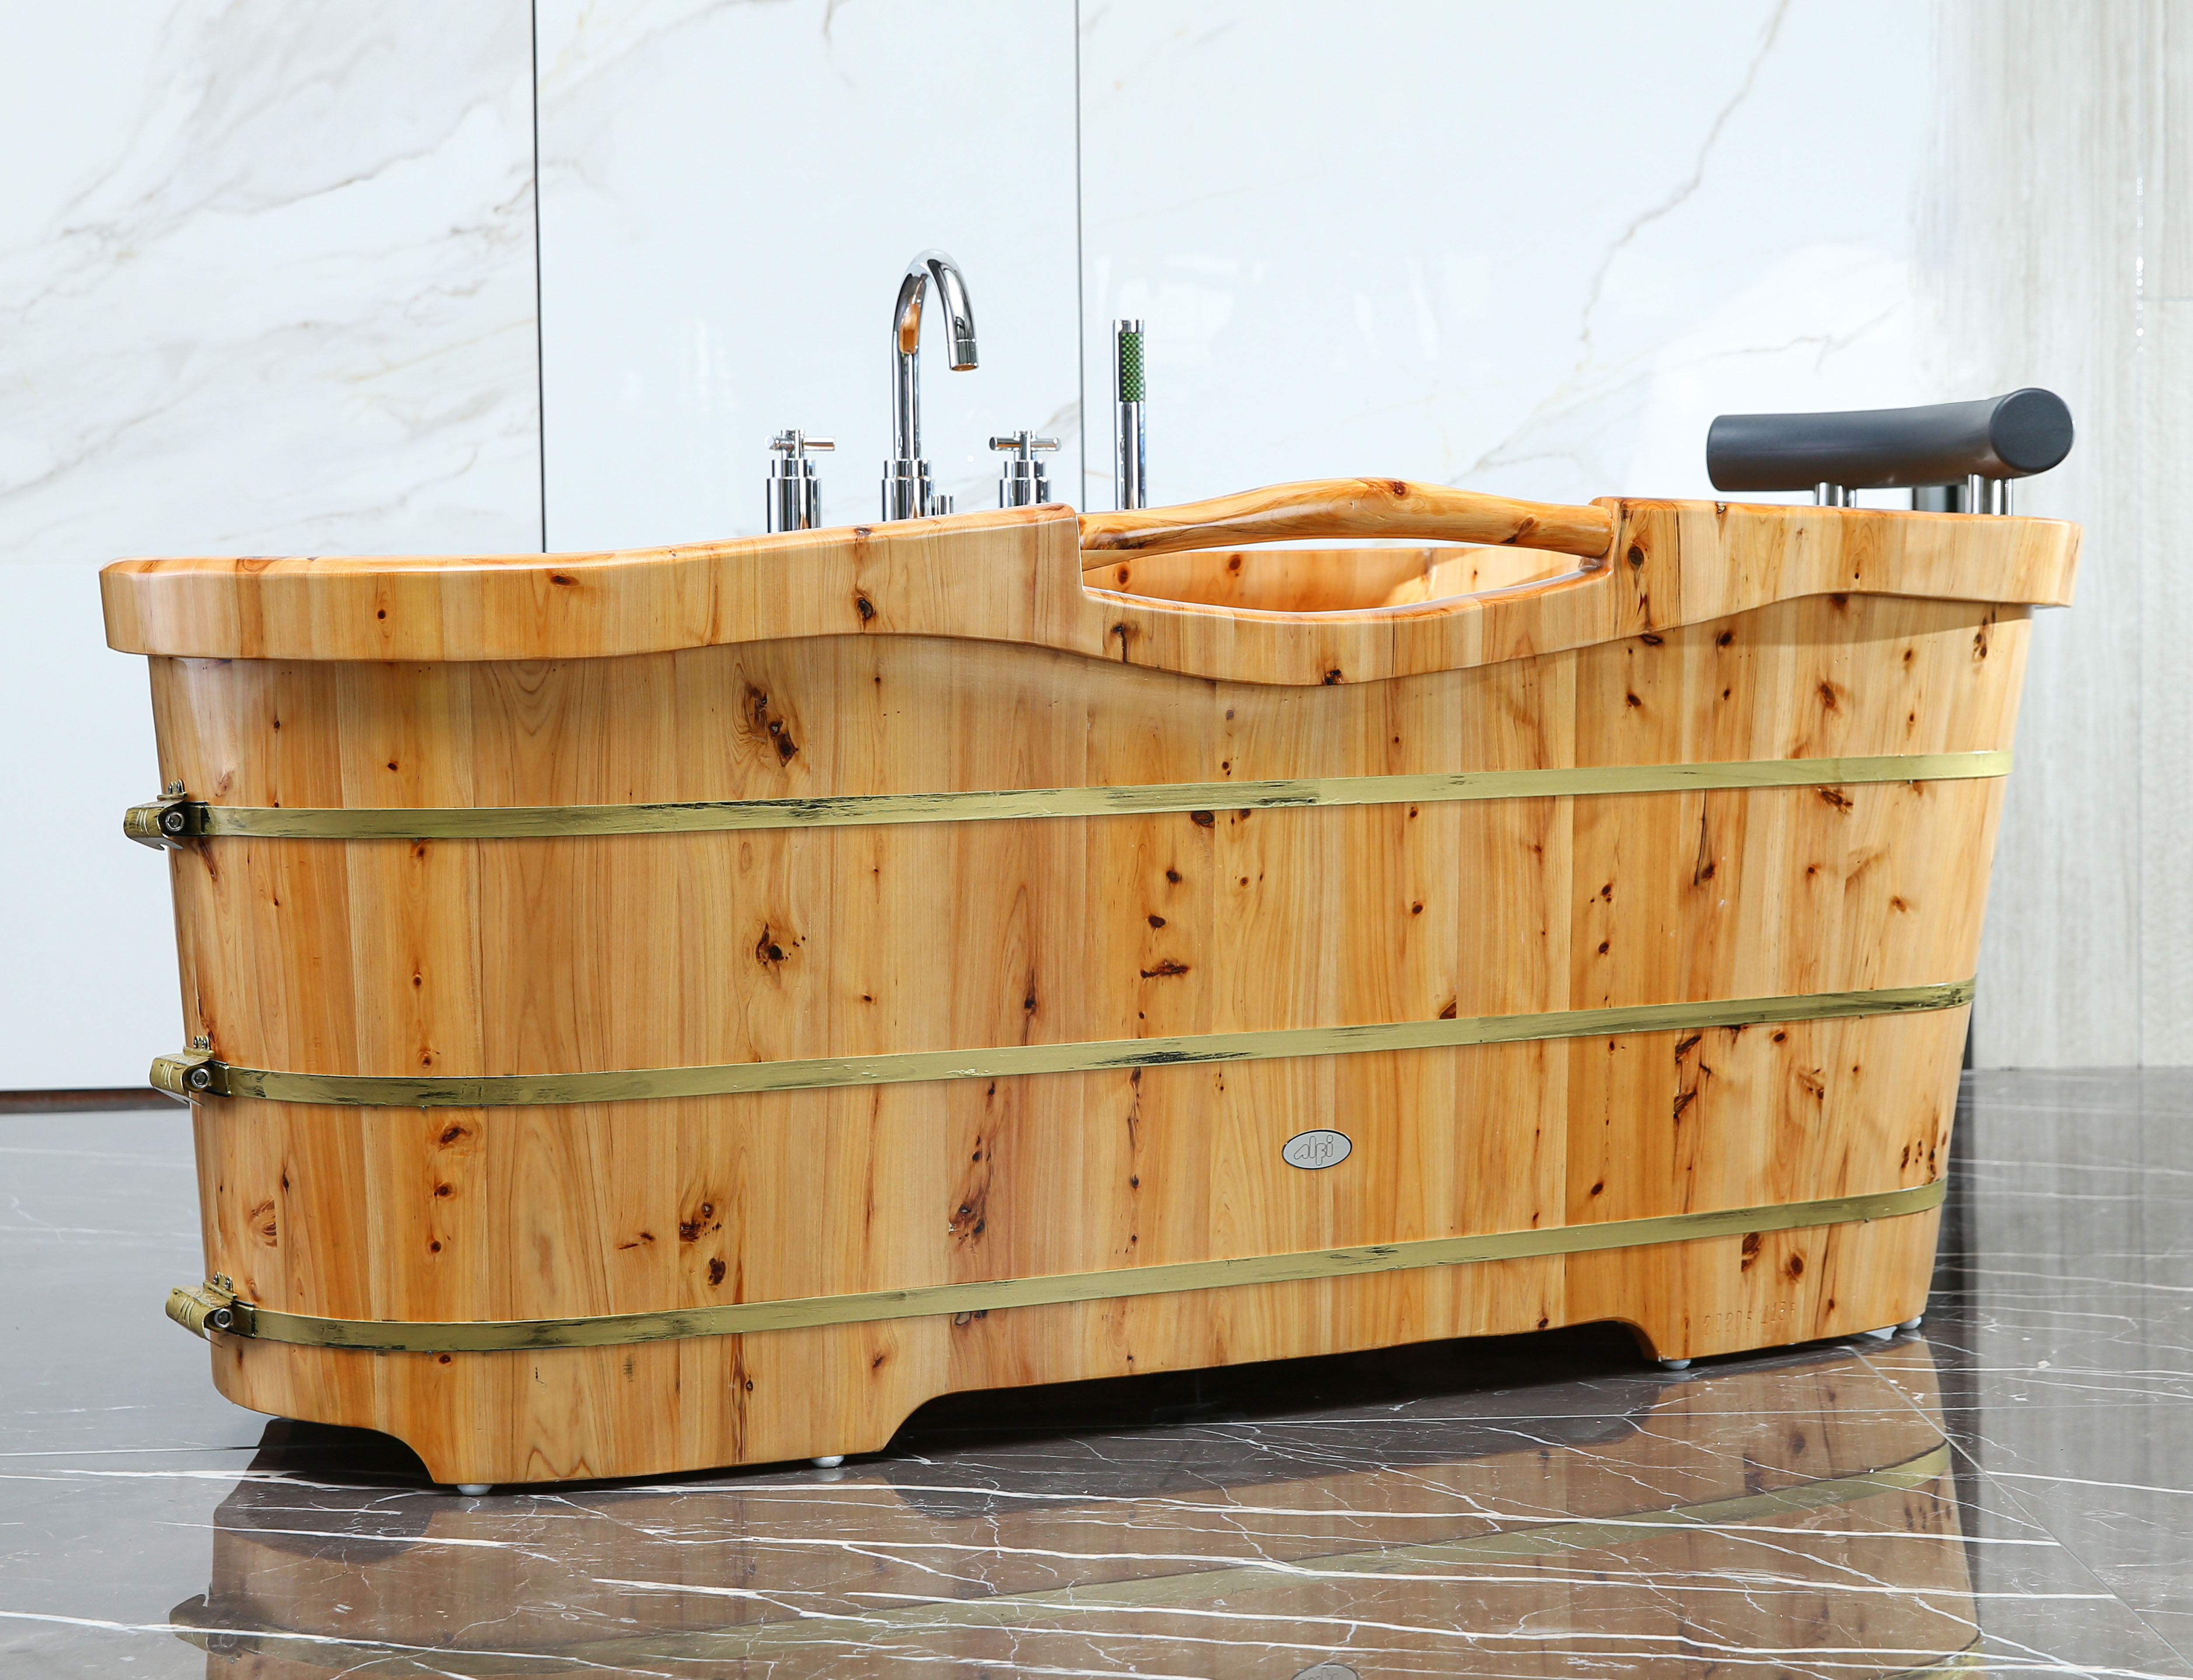 Ab1136 Ab1136 61&apos;&apos; Free Standing Cedar Wood Bath Tub With Chrome Tub Filler - Natural Wood